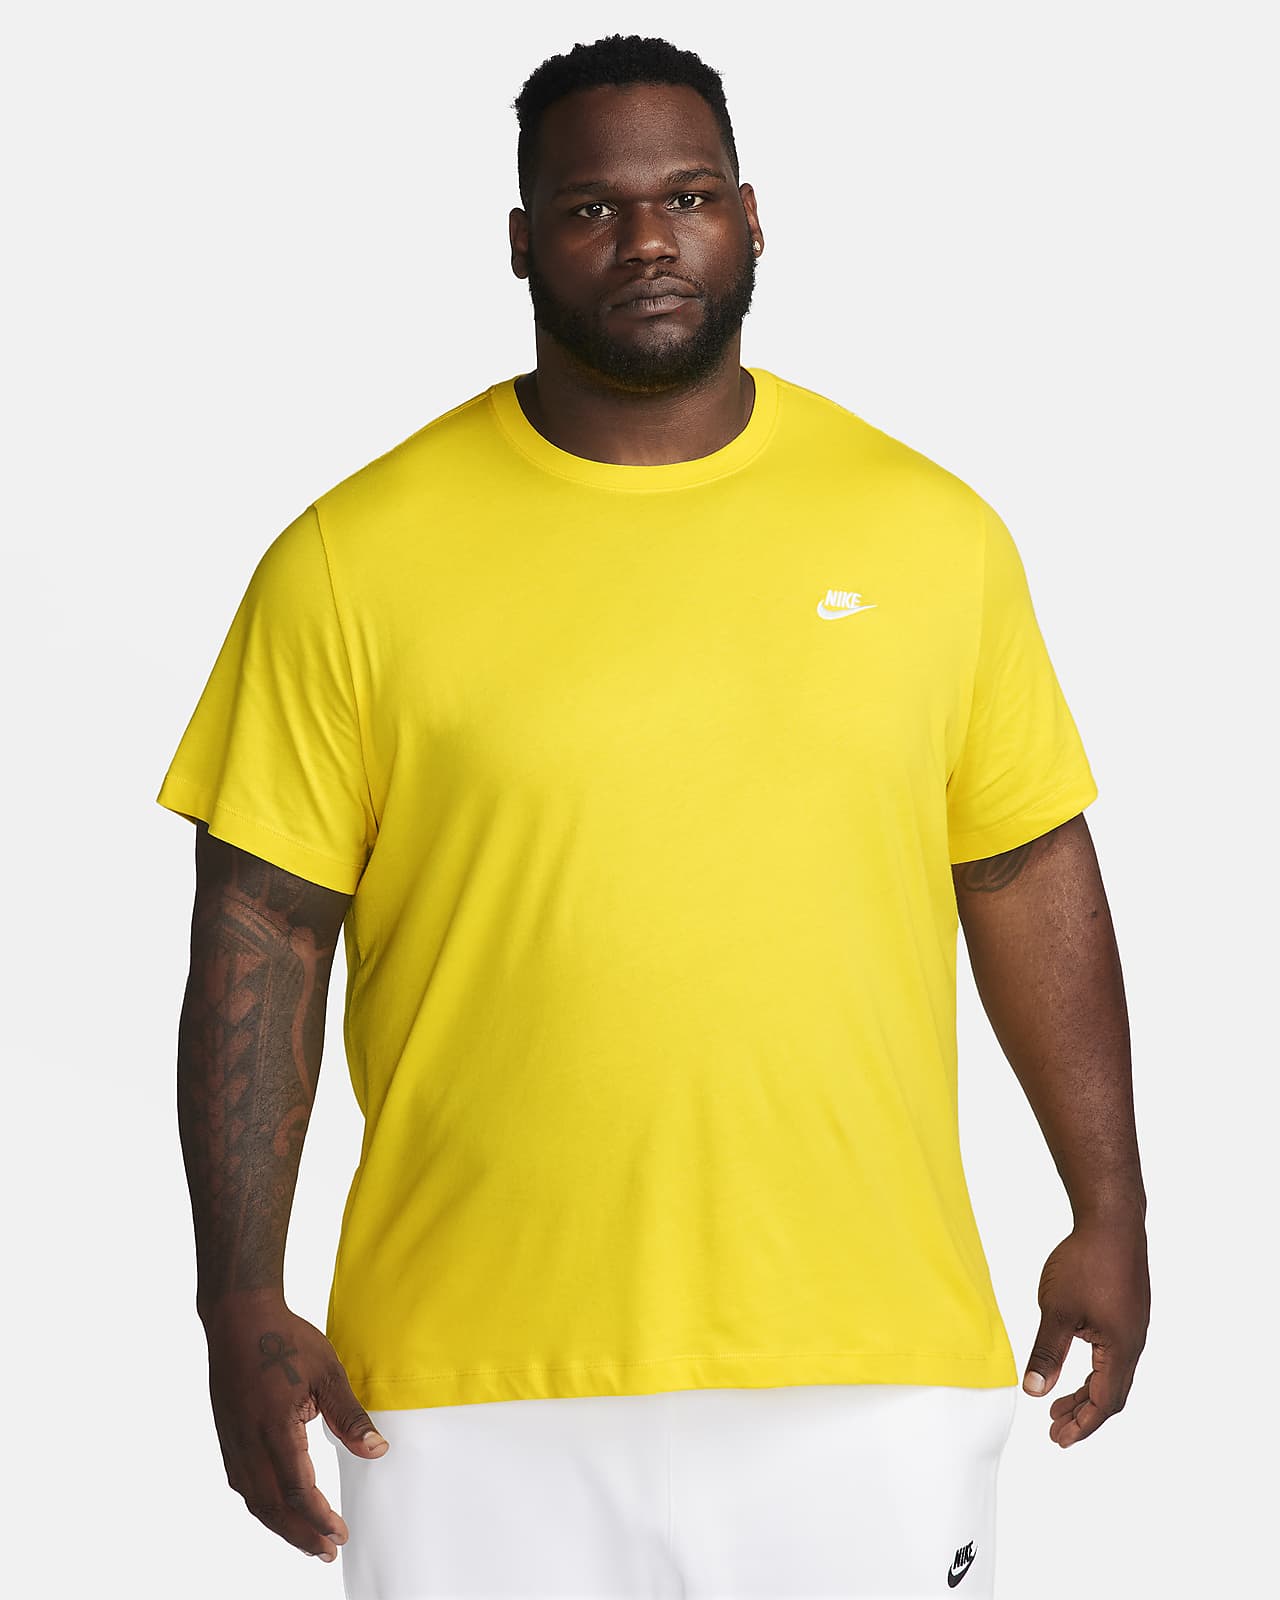 Nike Sportswear CLUB TEE - T-shirt - bas - midnight navy/white/mörkblå 